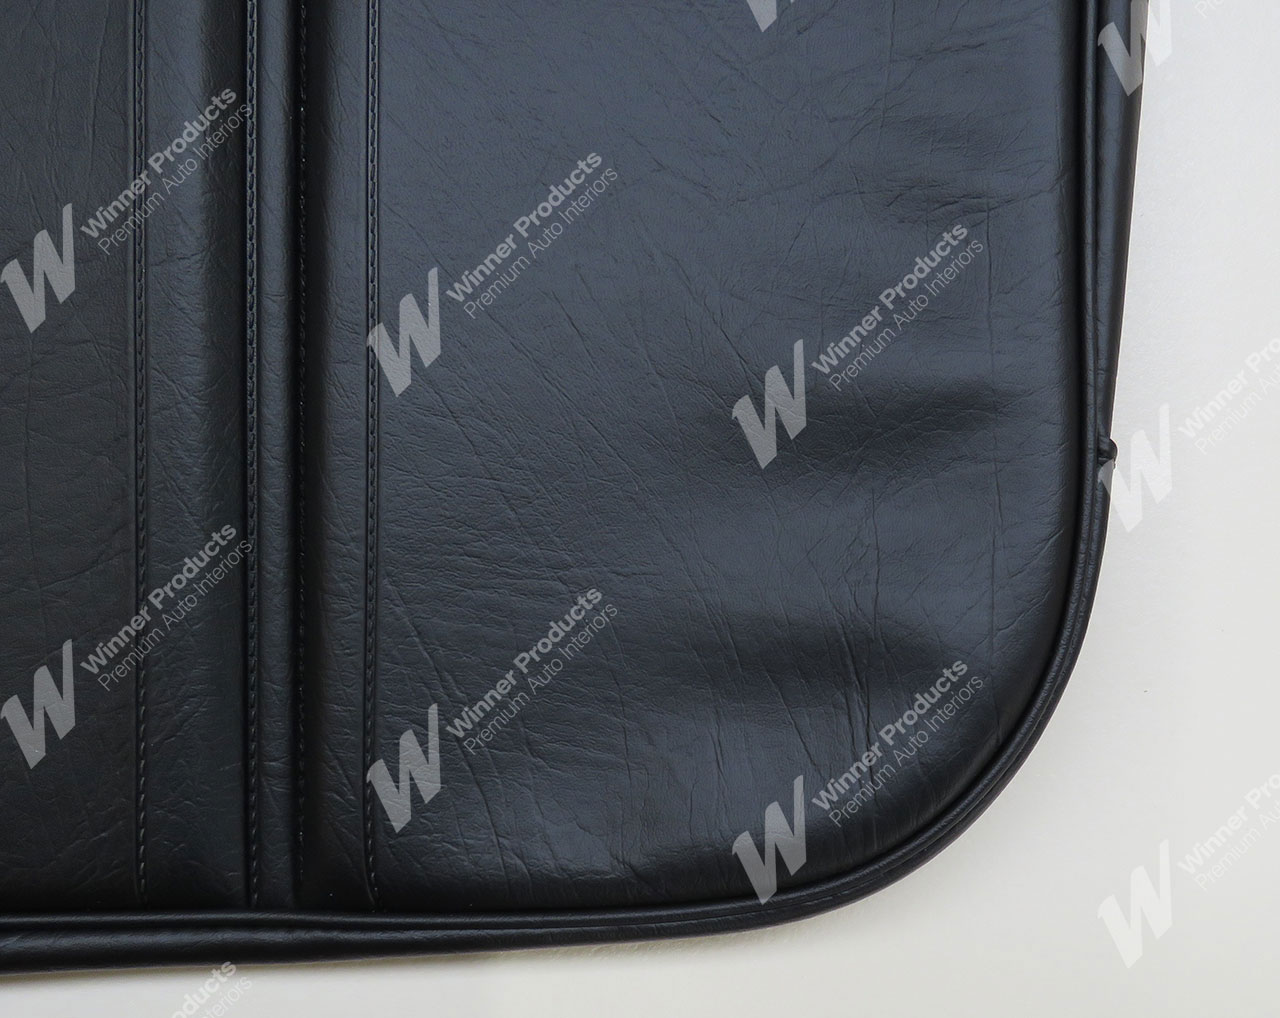 Holden Monaro HQ Monaro Coupe Mar 73-Sep 74 30E Black Seat Covers (Image 6 of 6)